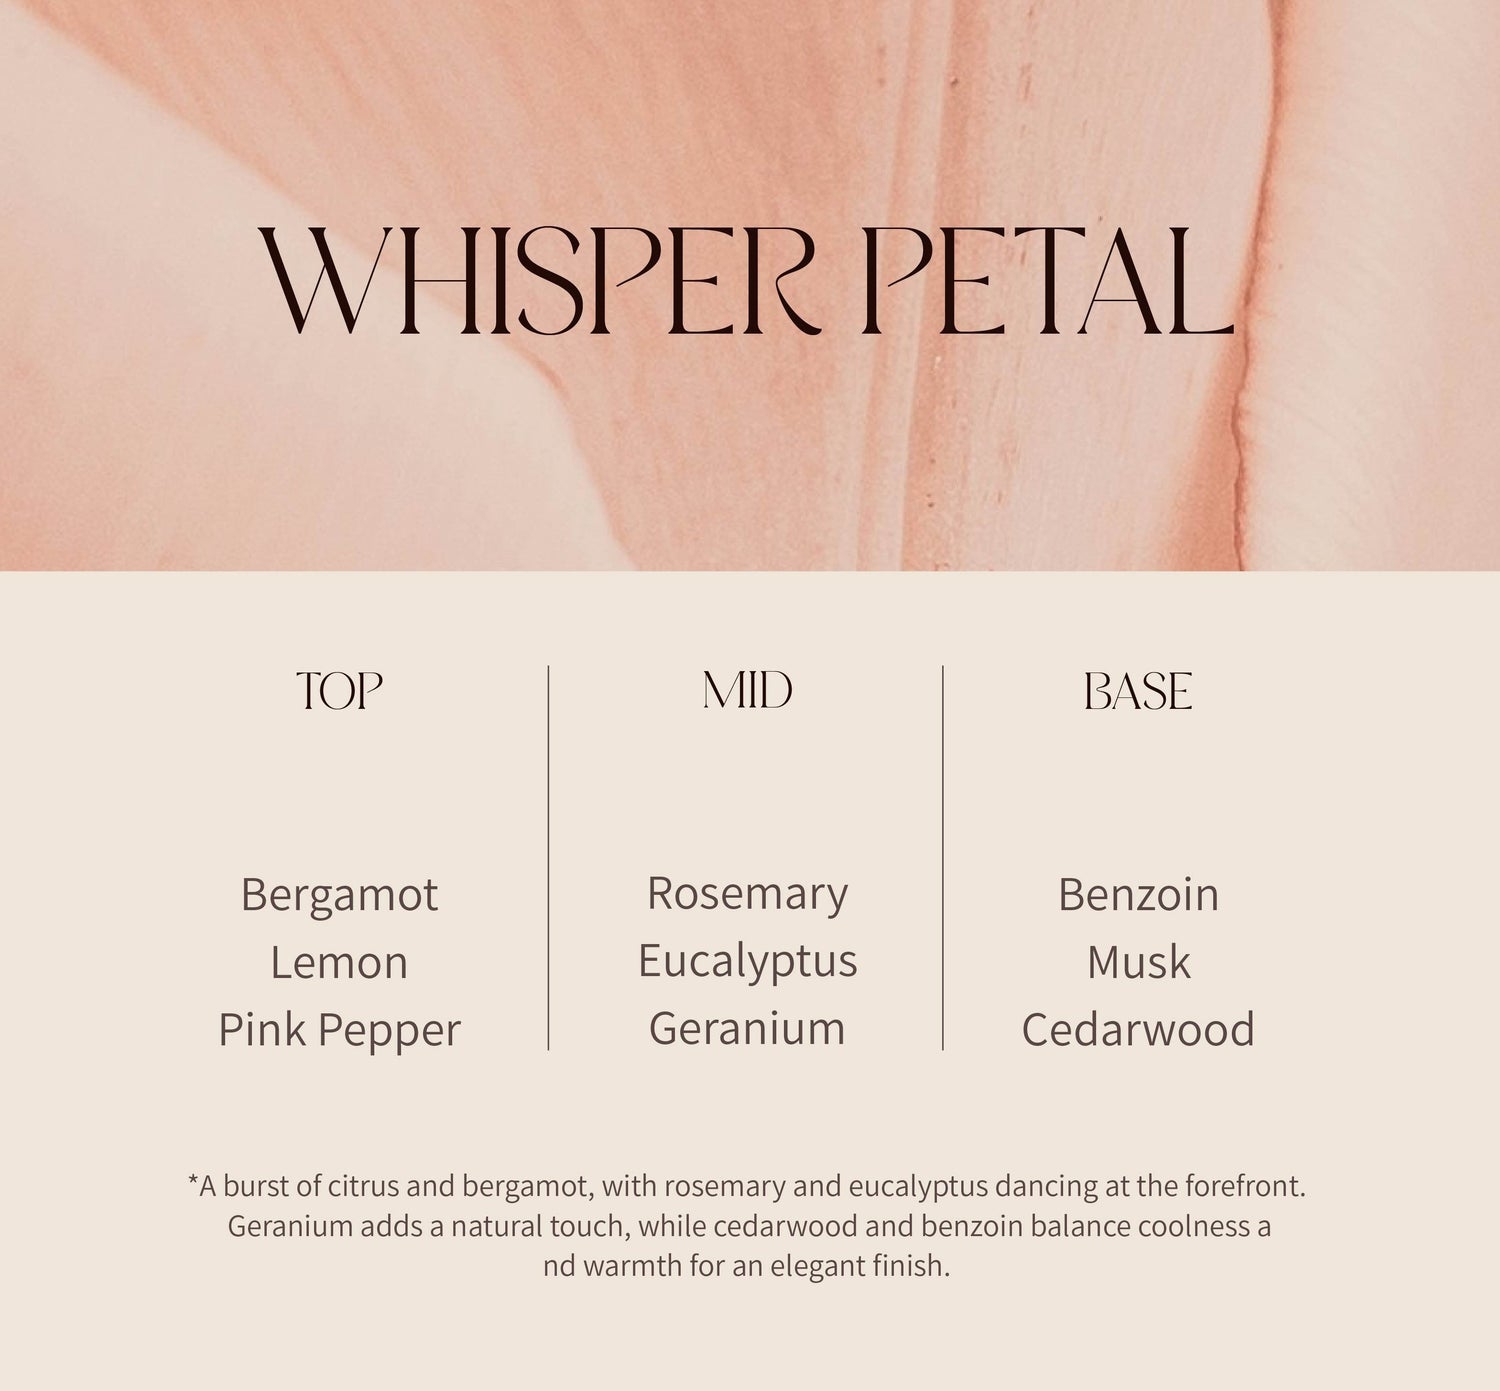 moisturizing-body-wash_whisper-petal_2.jpg